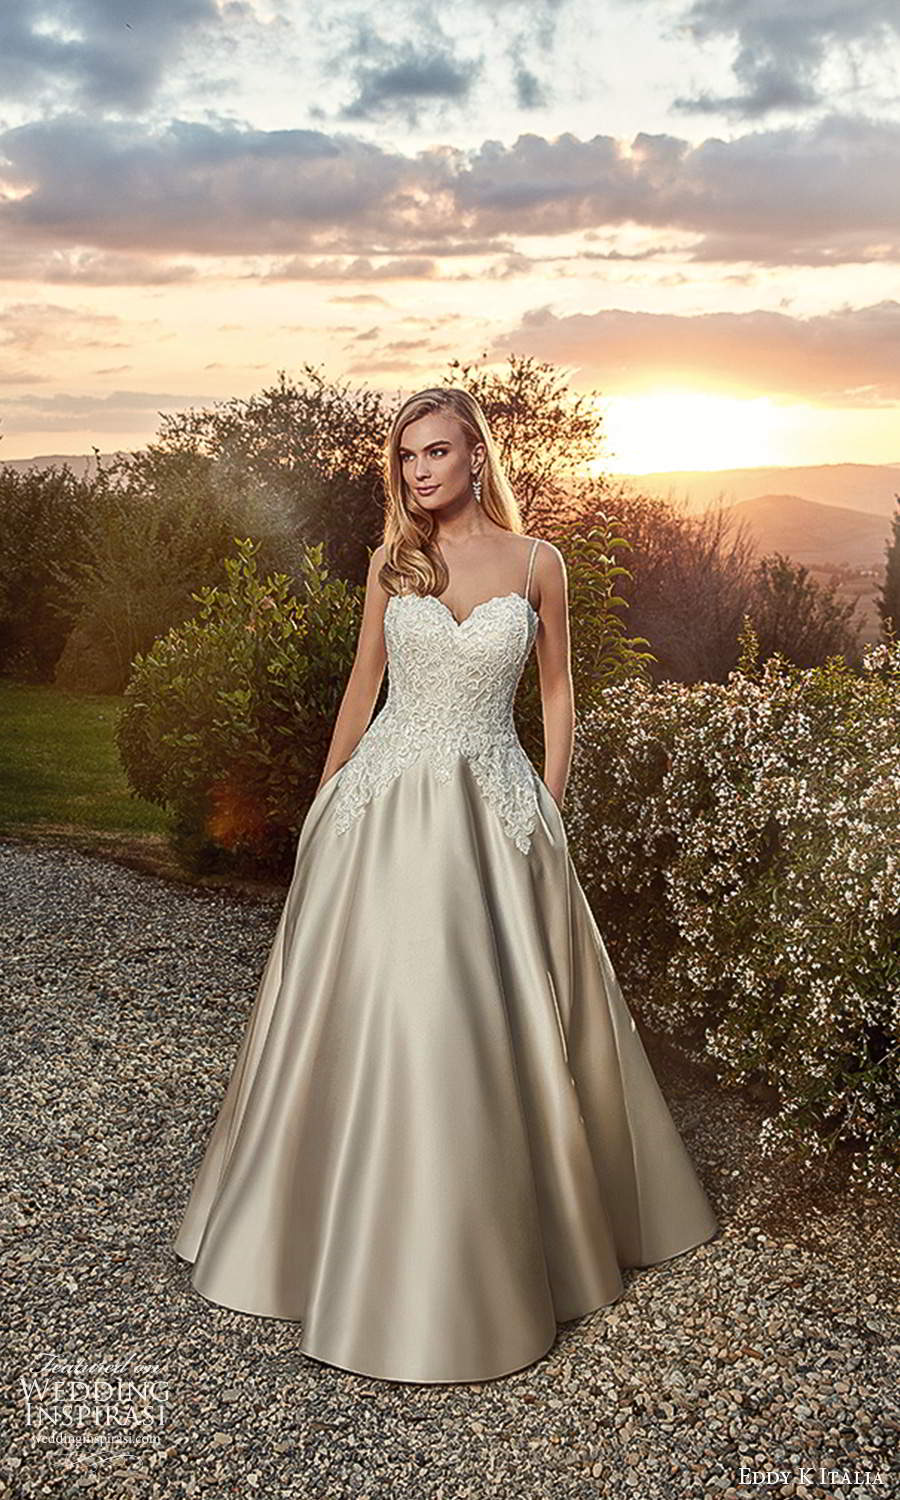 eddy k 2021 italia bridal sleeveless thin straps sweetheart neckline embellished bodice a line ball gown wedding dress chapel train (23) mv